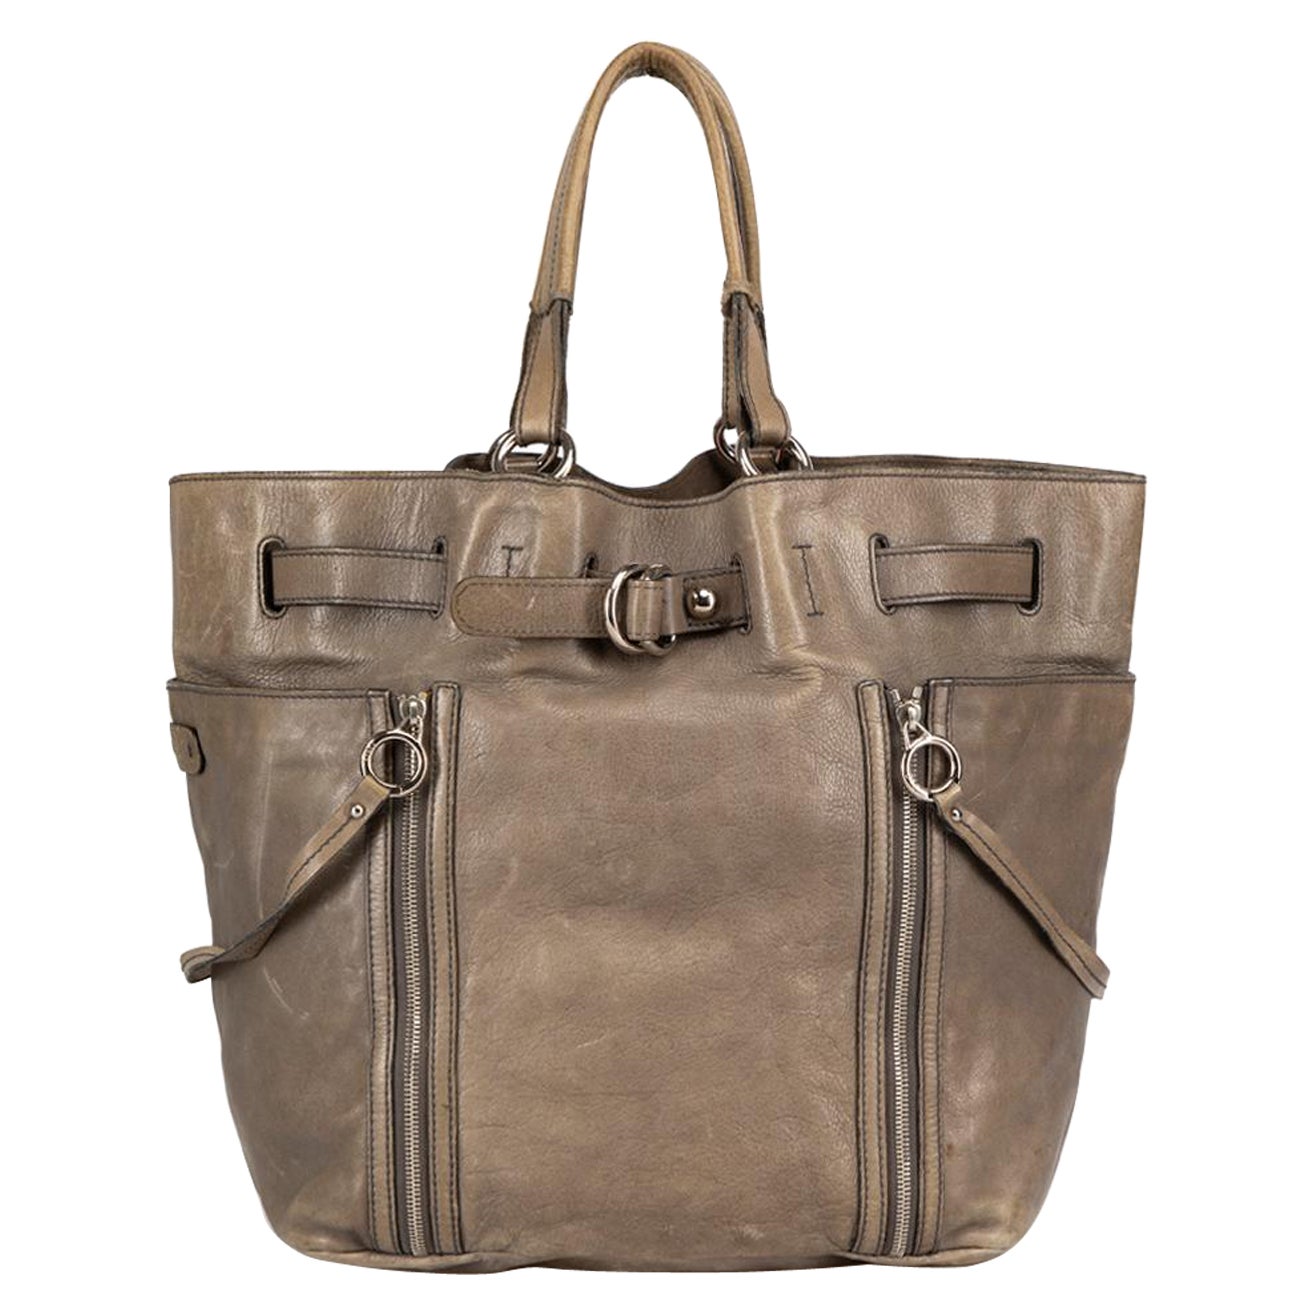 Dolce & Gabbana Khaki Leather Strap Tote Bag